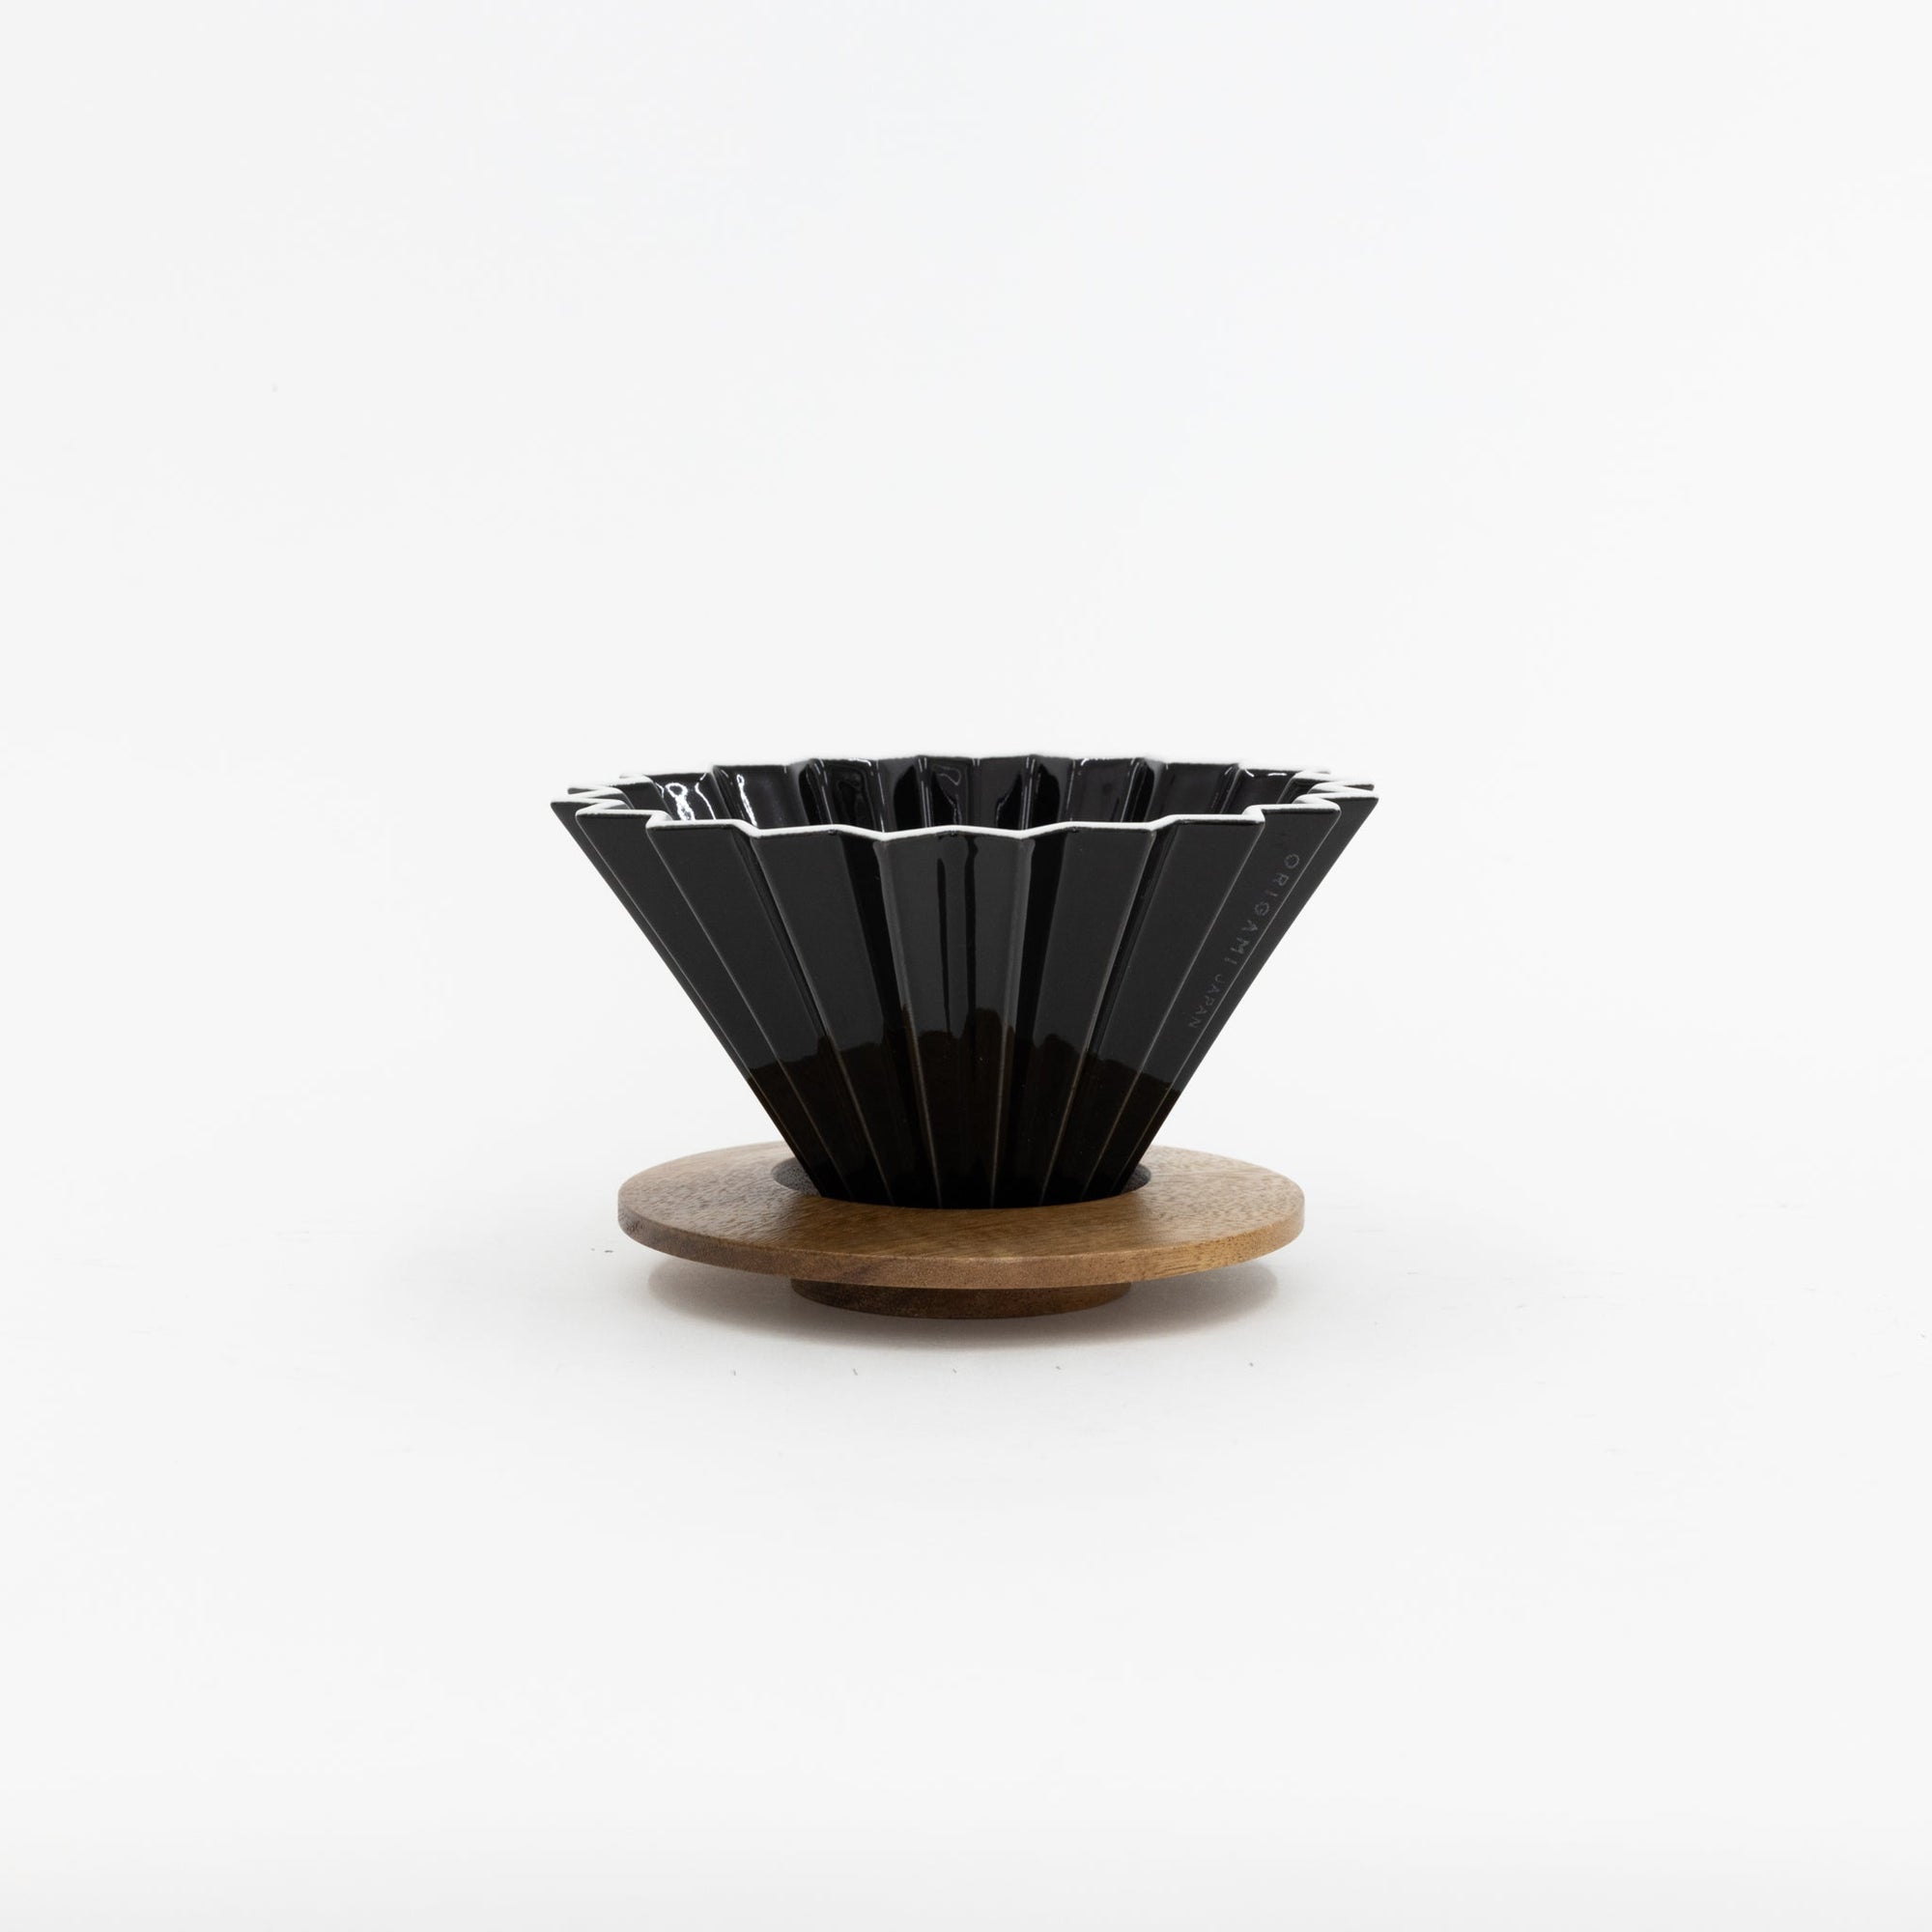 Ceramic Origami Coffee Drippers | Tortoise General Store